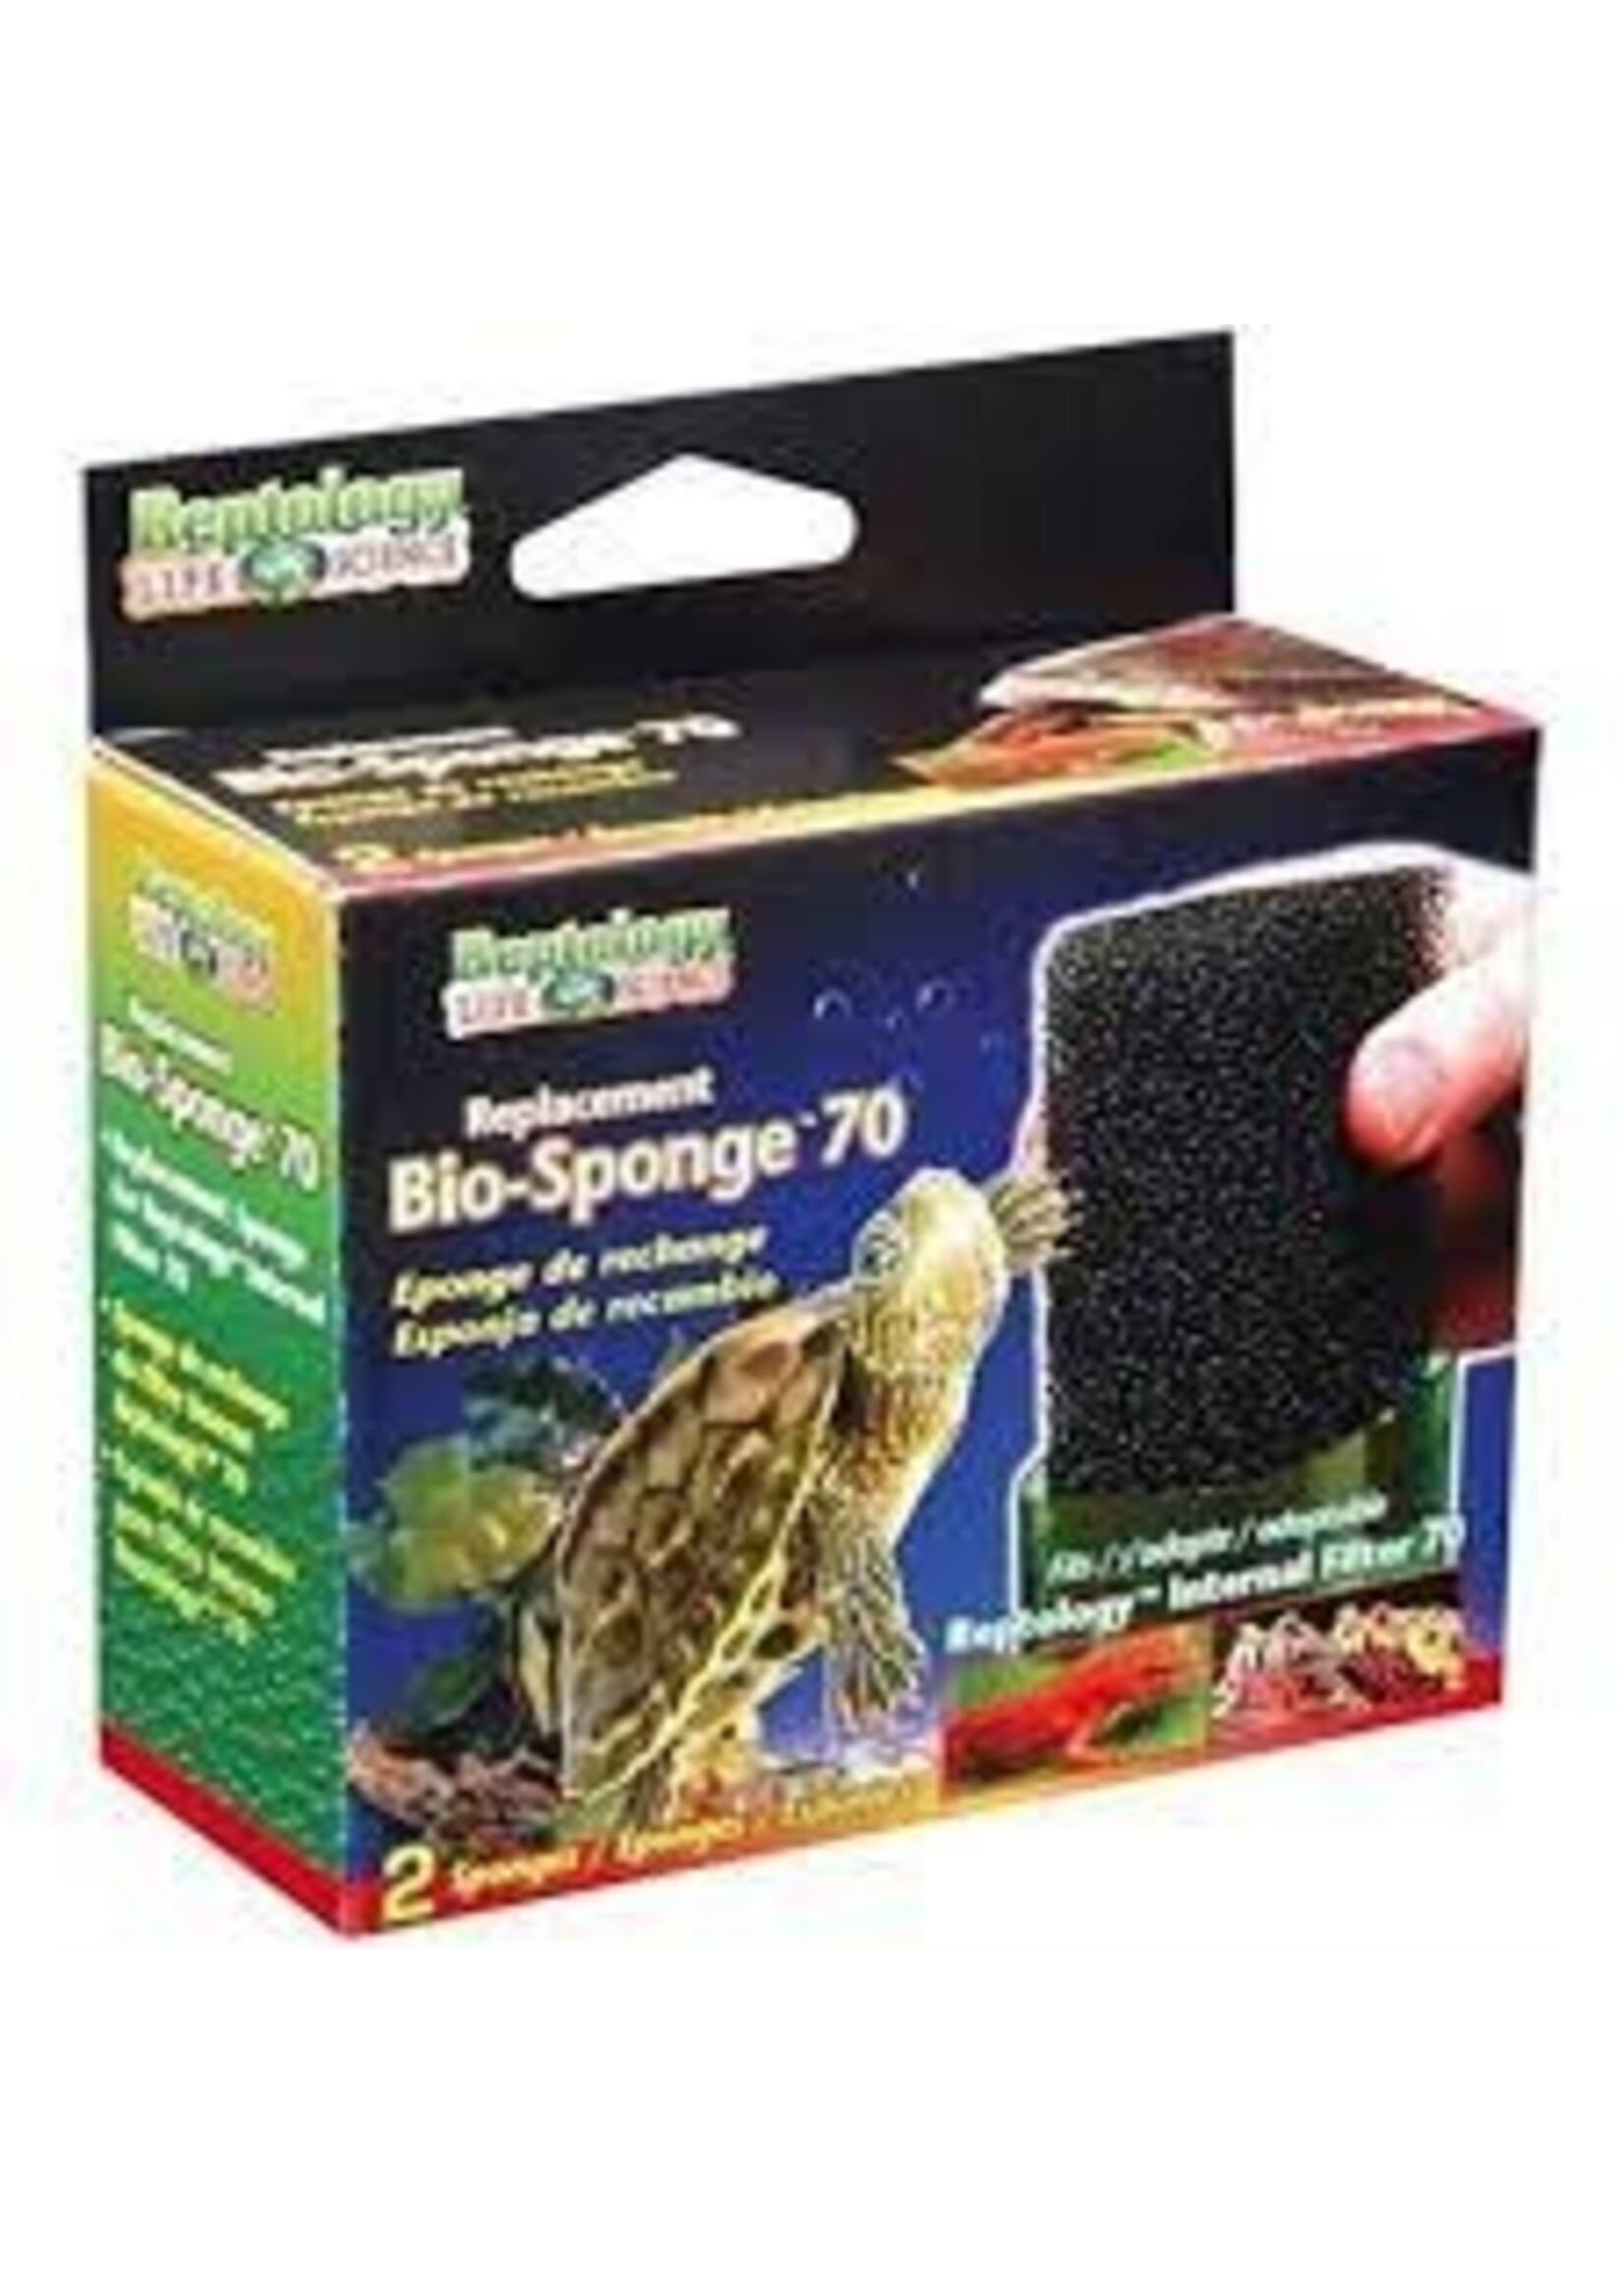 Penn Plax Reptology Replacement Bio-Sponge 70